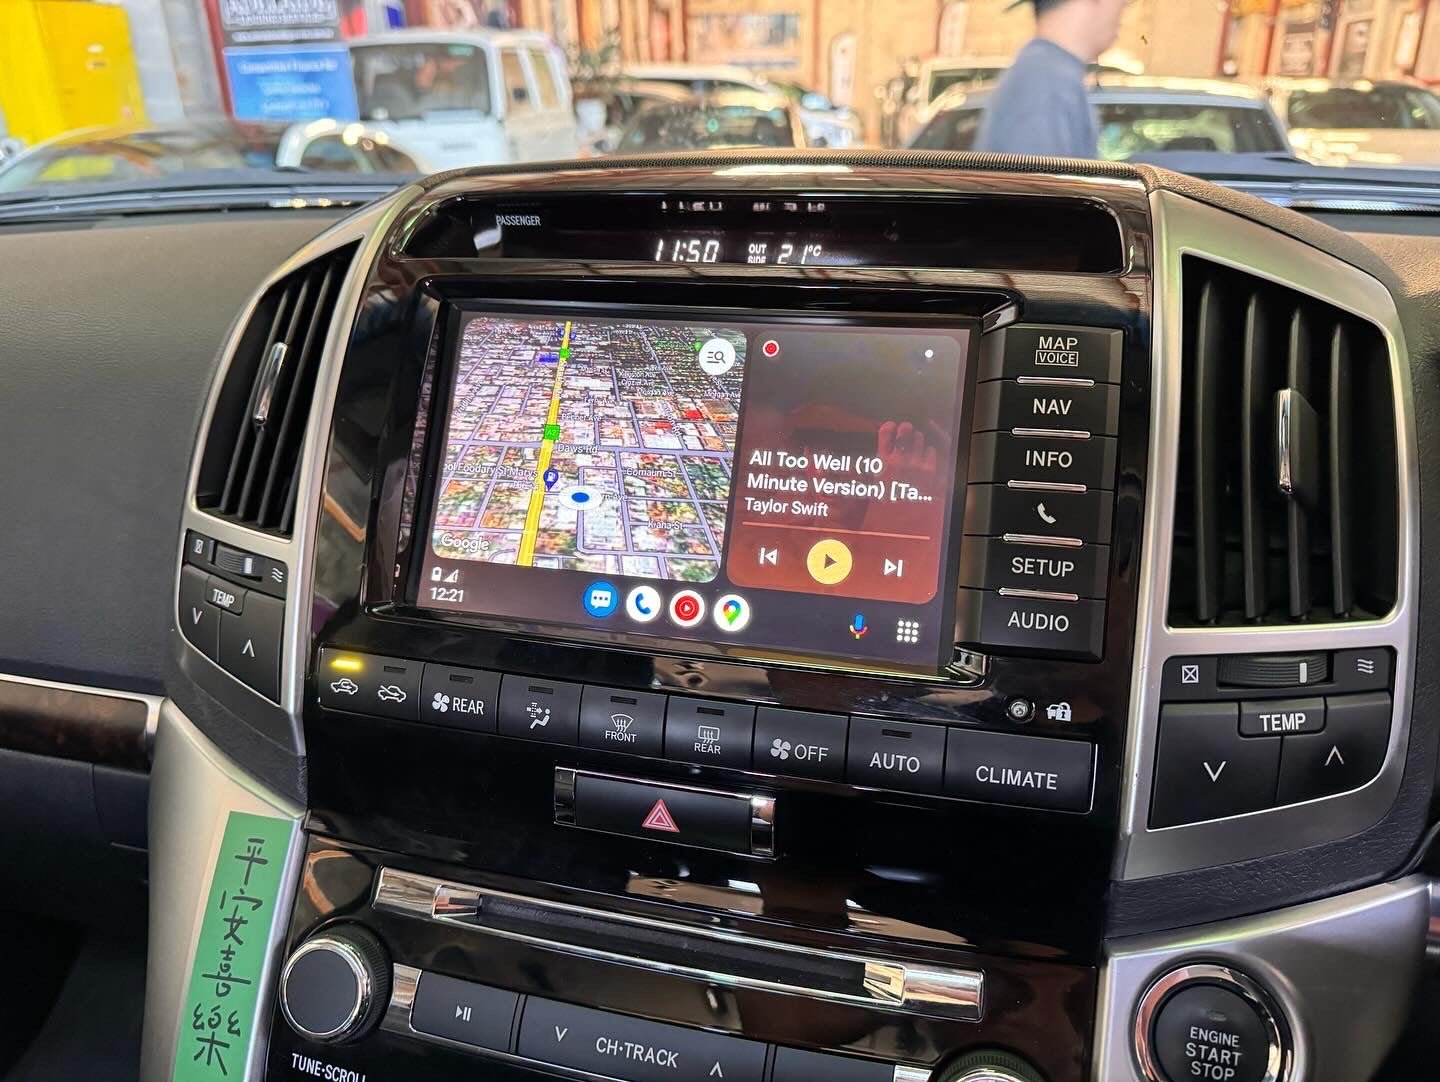 2010-2014 Toyota Landcruiser Sahara Wireless Apple Carplay & Android Auto Integration Kits - CrownFocus